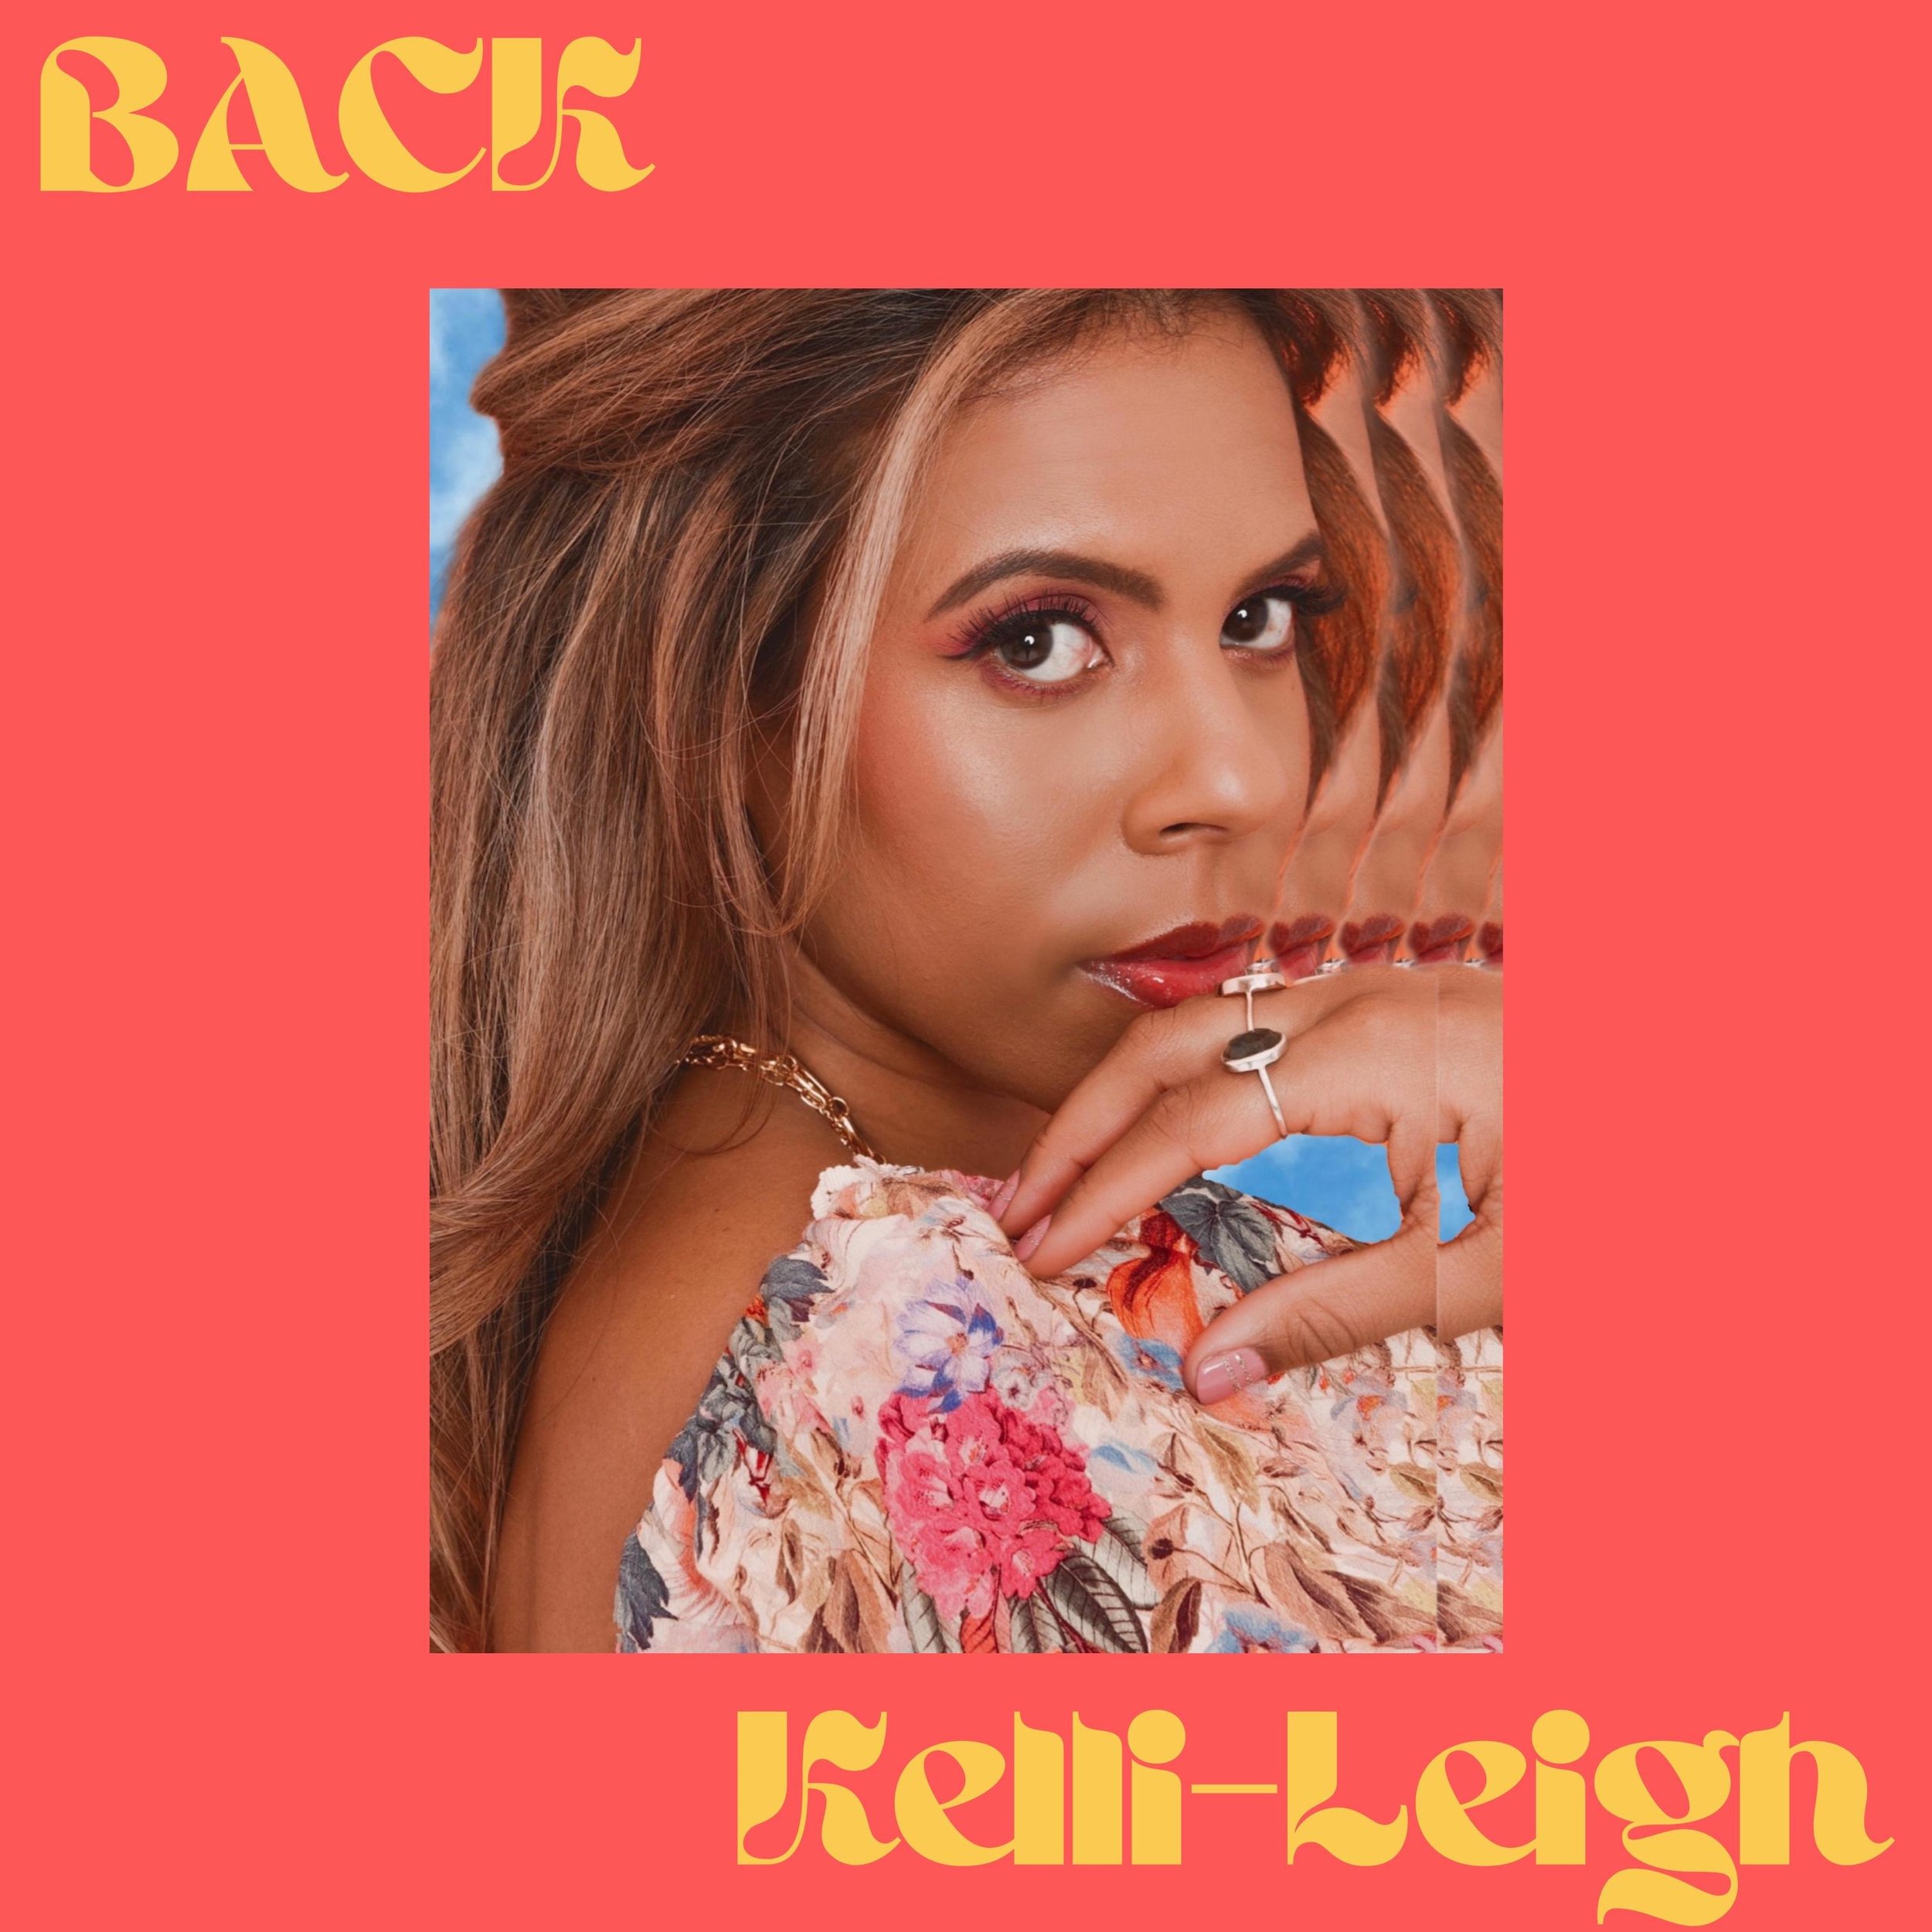 Kelli-Leigh Back cover artwork